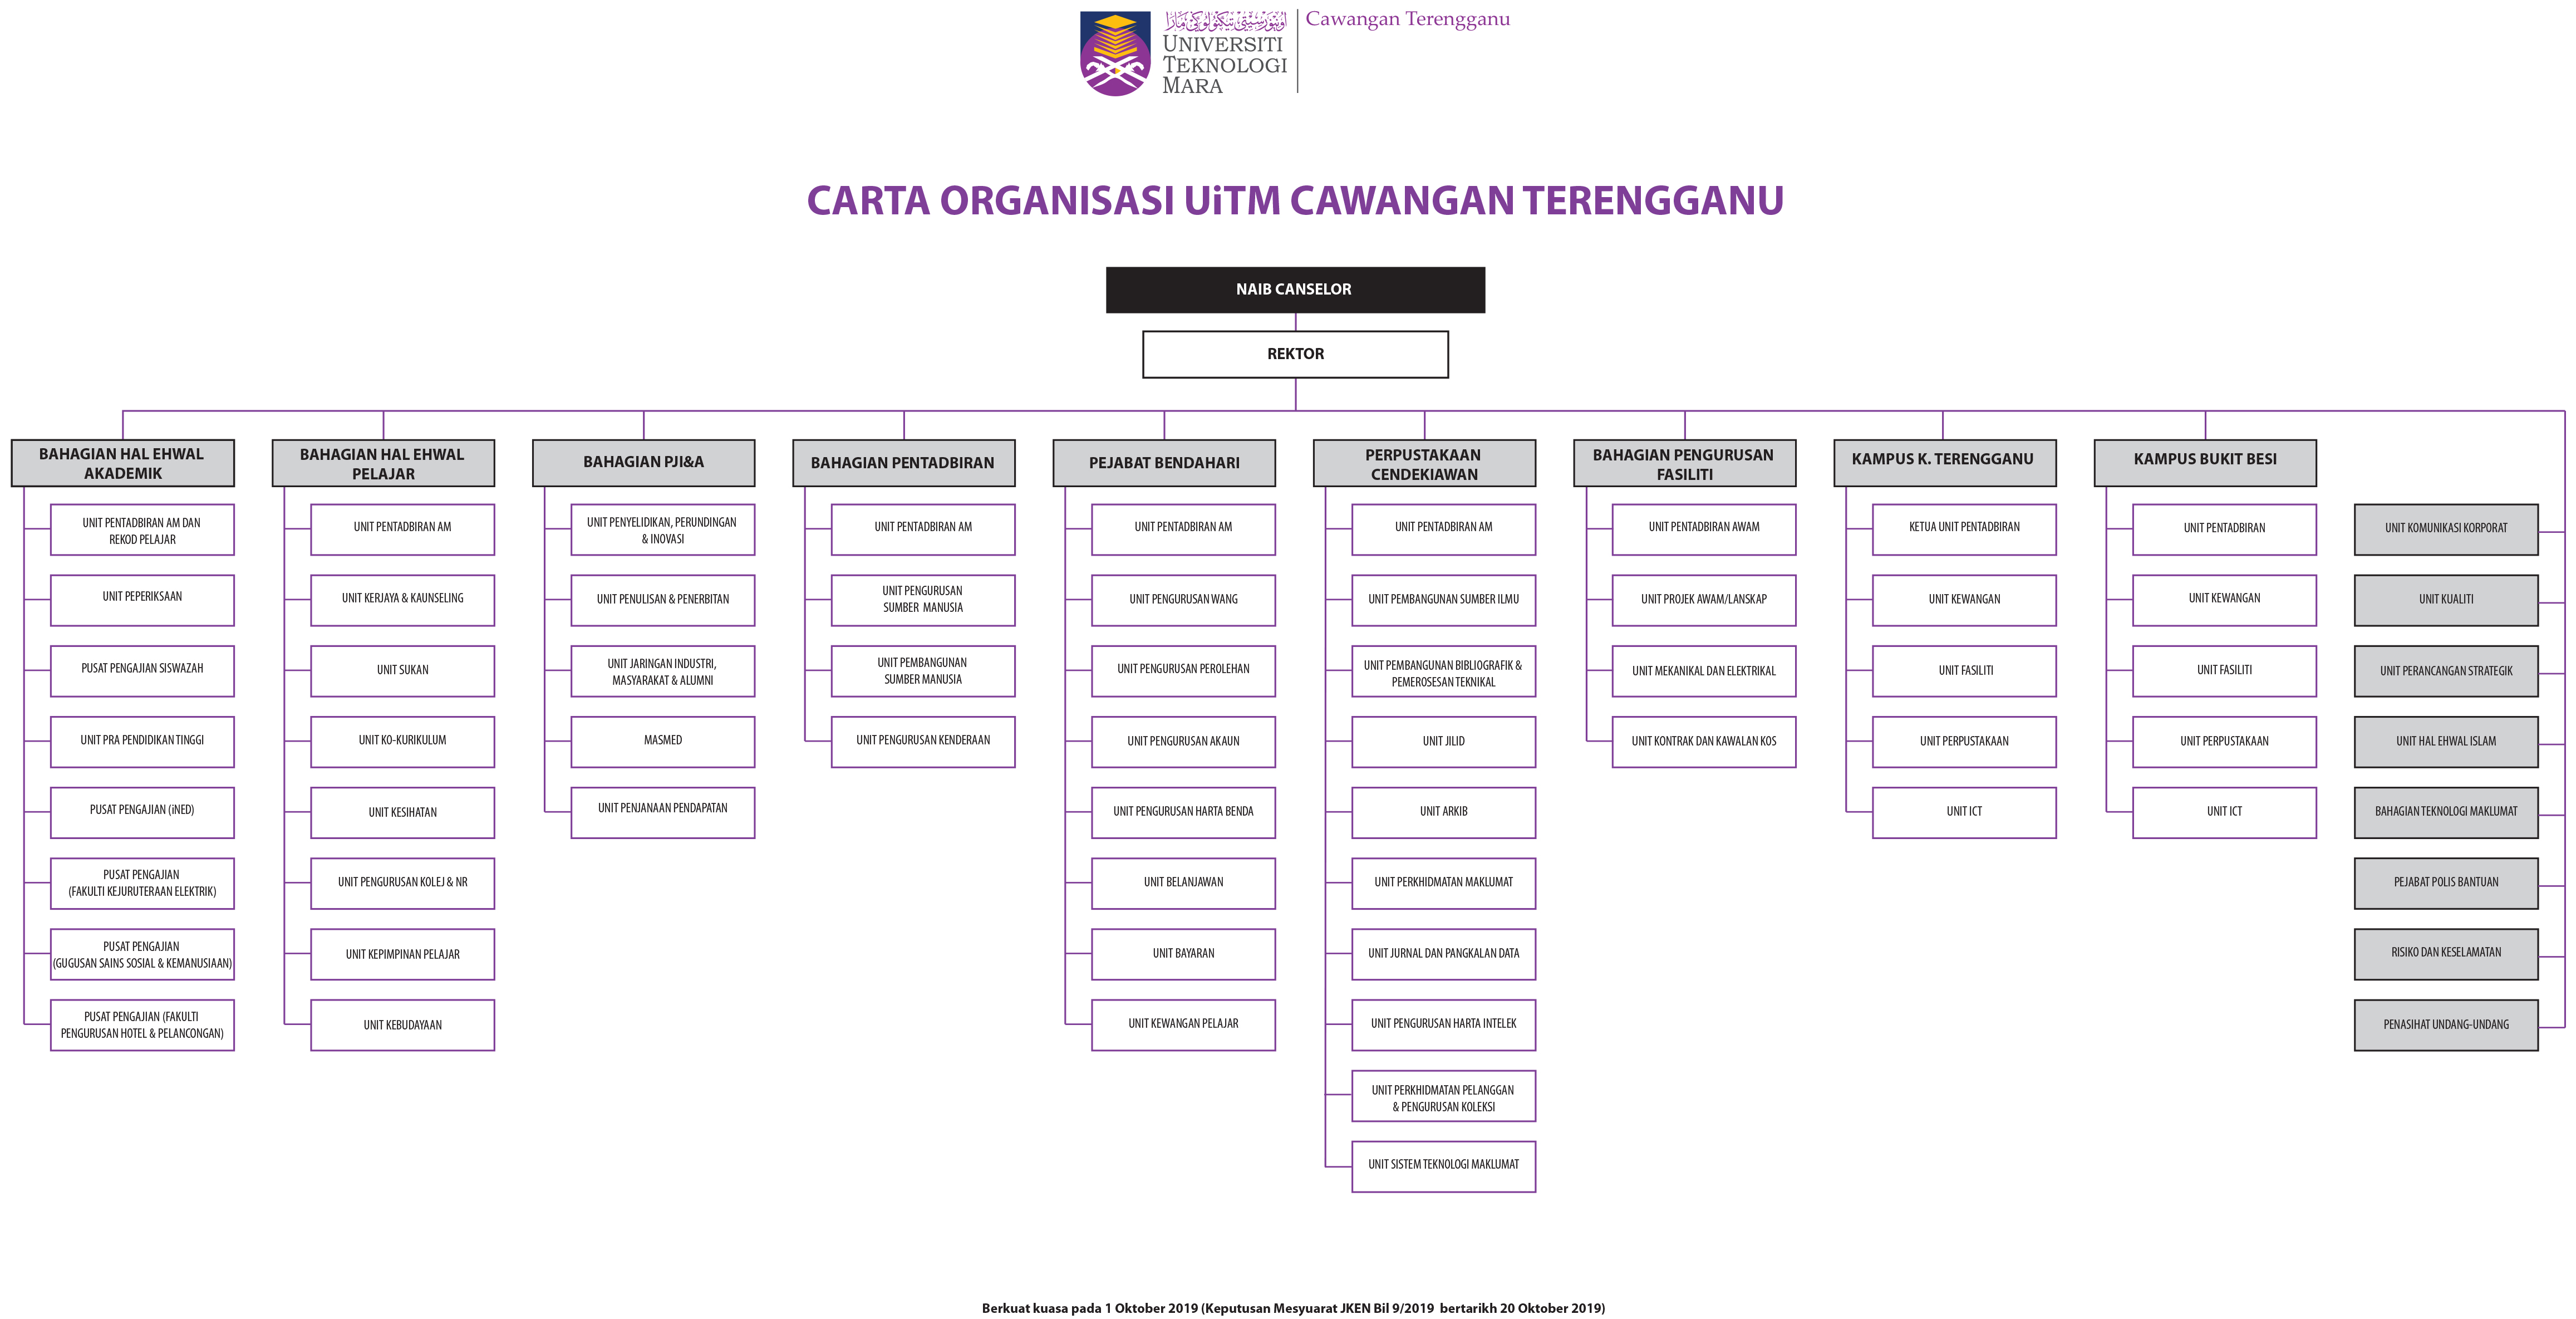 Carta Organisasi UiTM Cawangan Terengganu